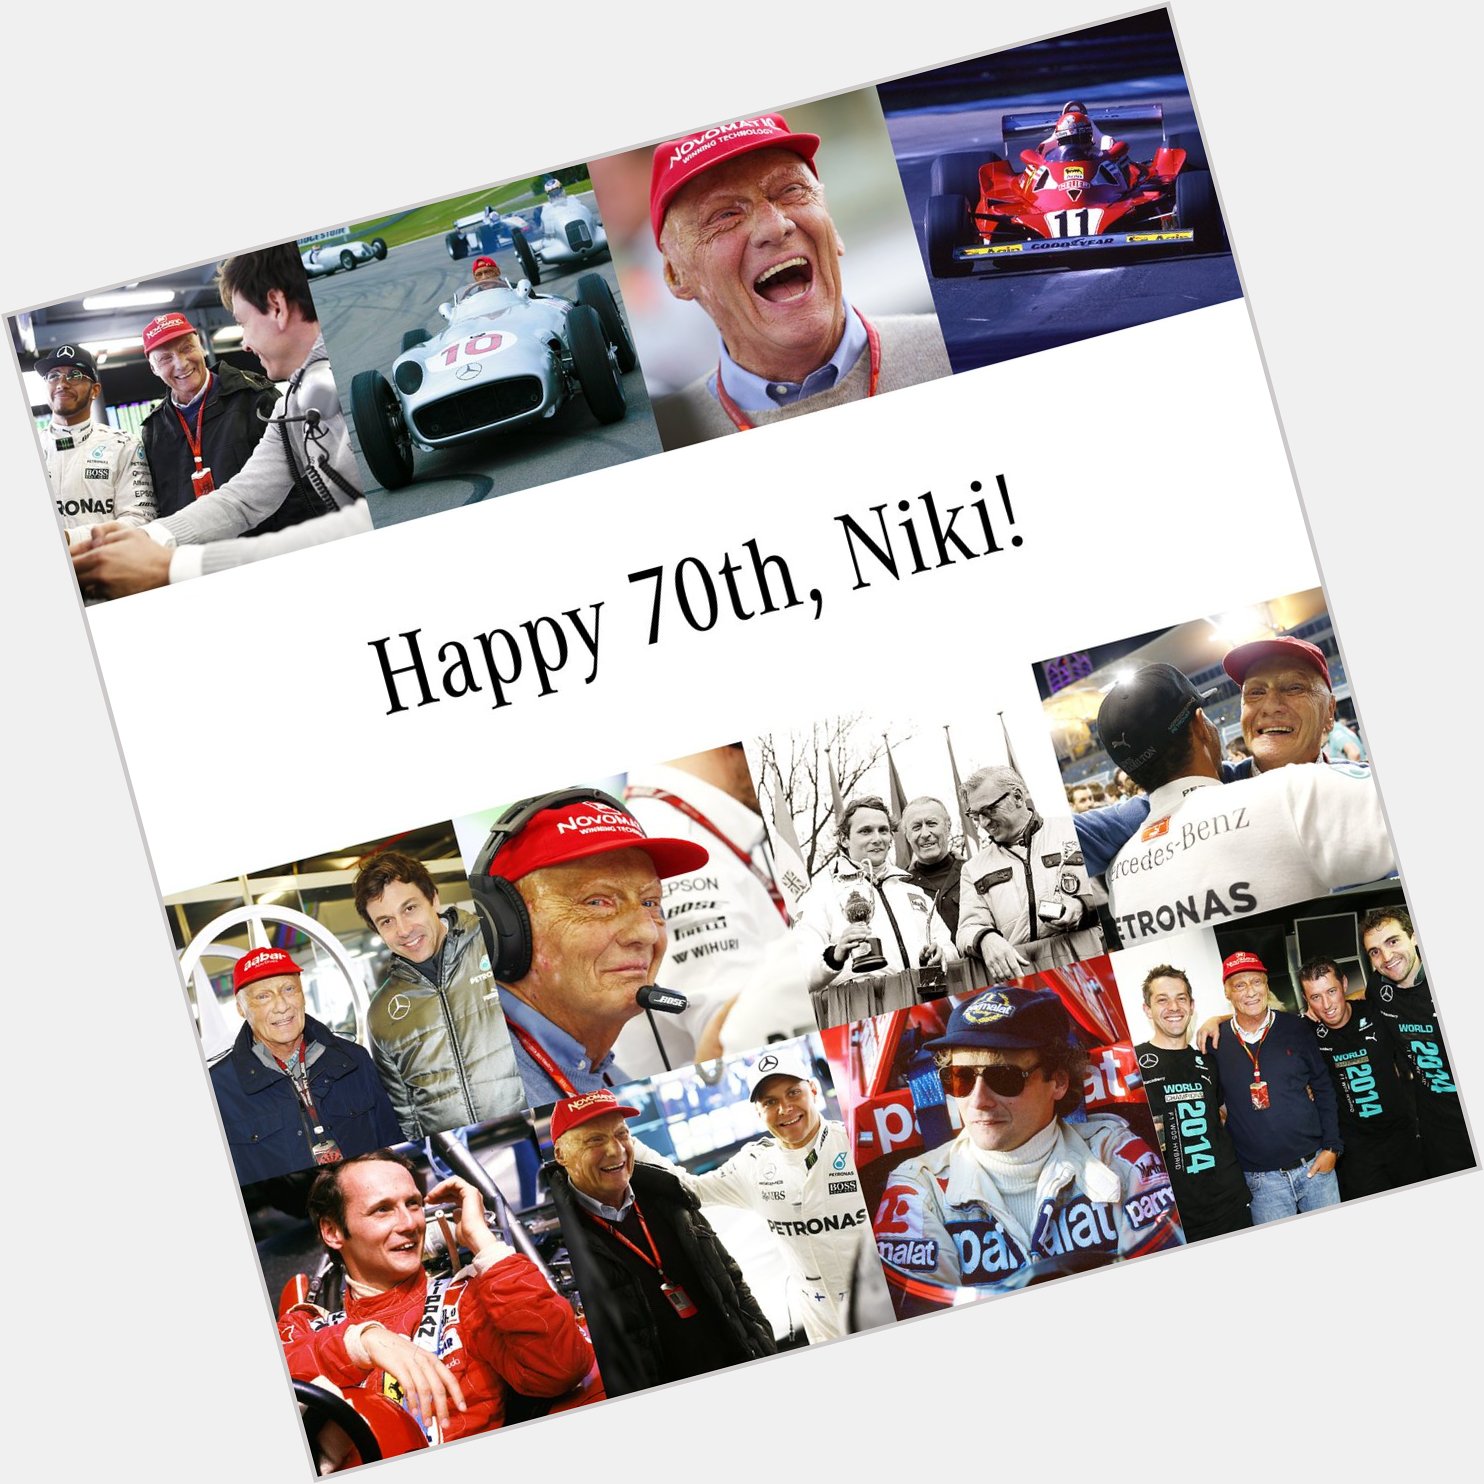 Three-time world champion ! 
Happy birthday, Niki Lauda!      